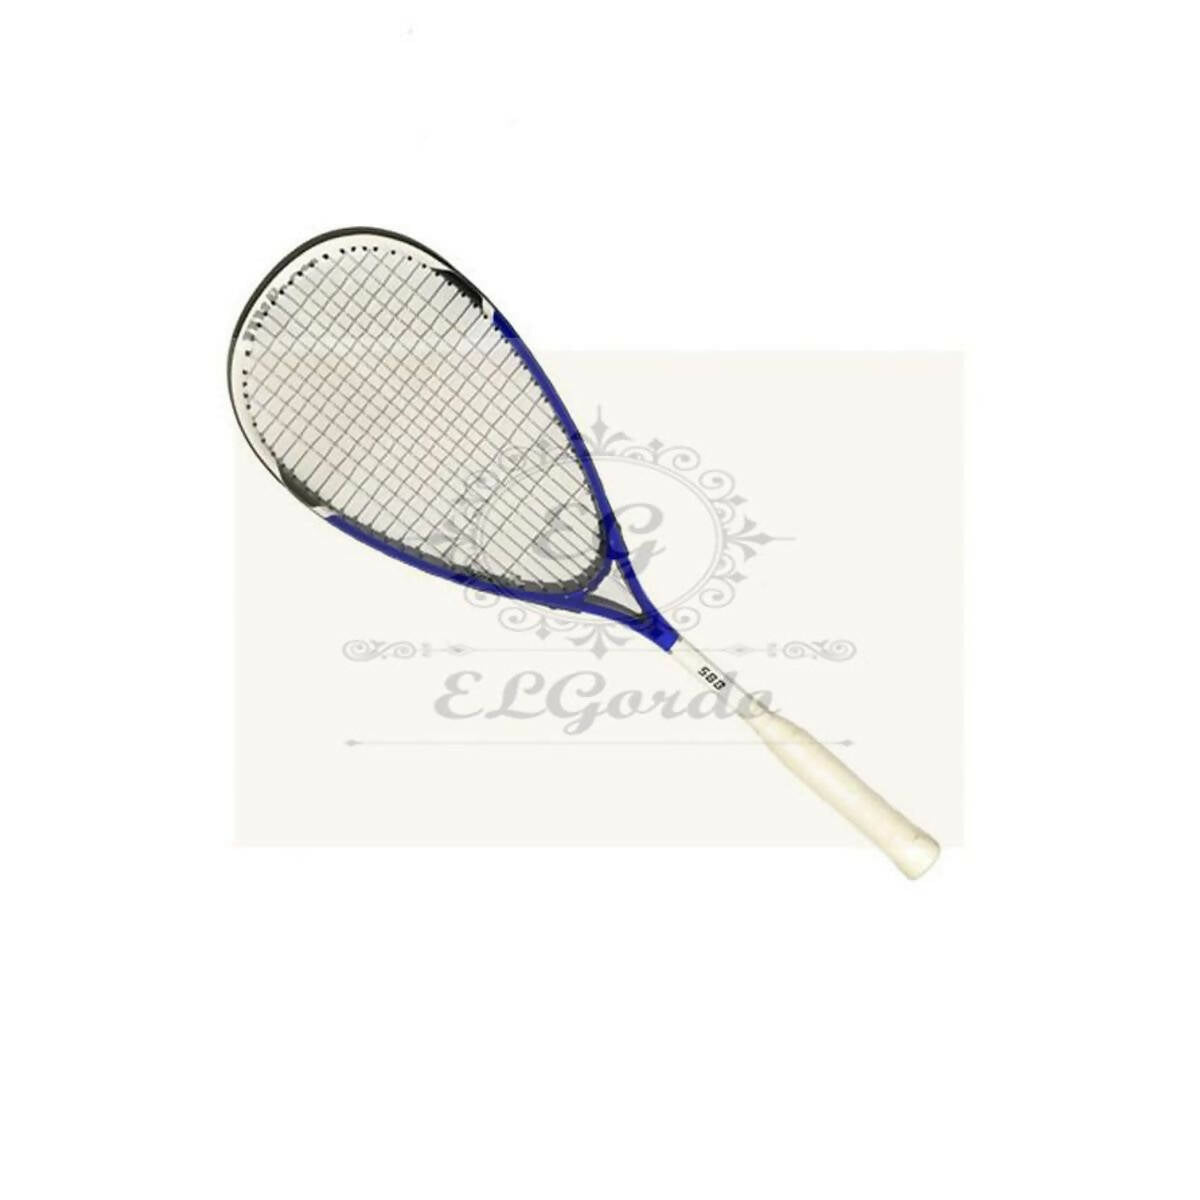 Hyper Wilson Hammer Squash Racket